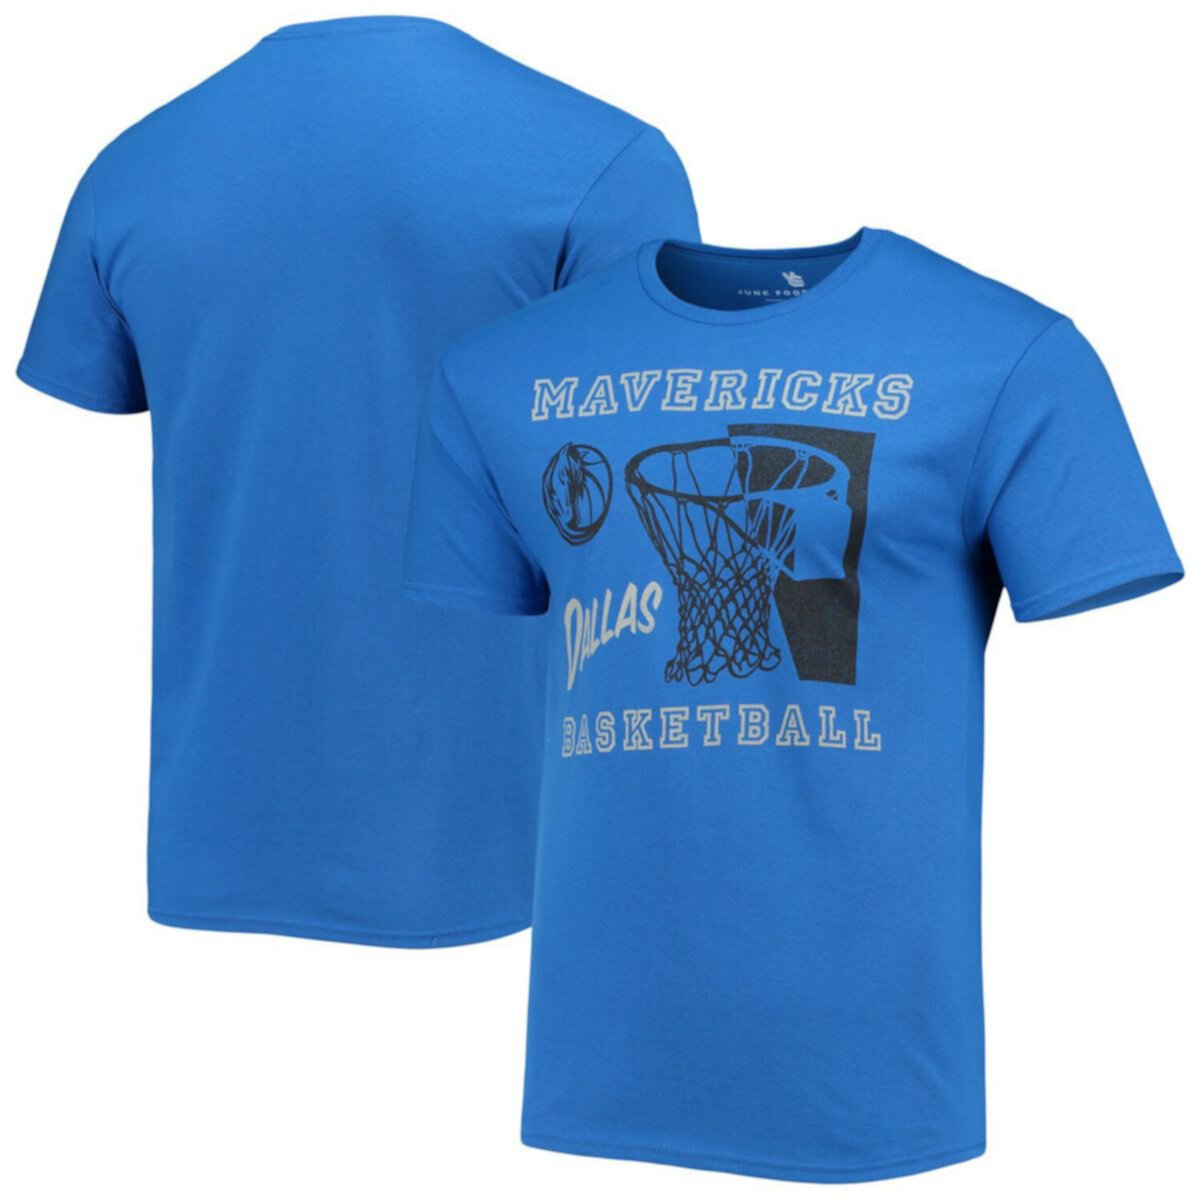 Футболка Даллас Маверикс. Мужские футболки синие Fanatics. Mitchell&Ness Original футболка голубая мужская.